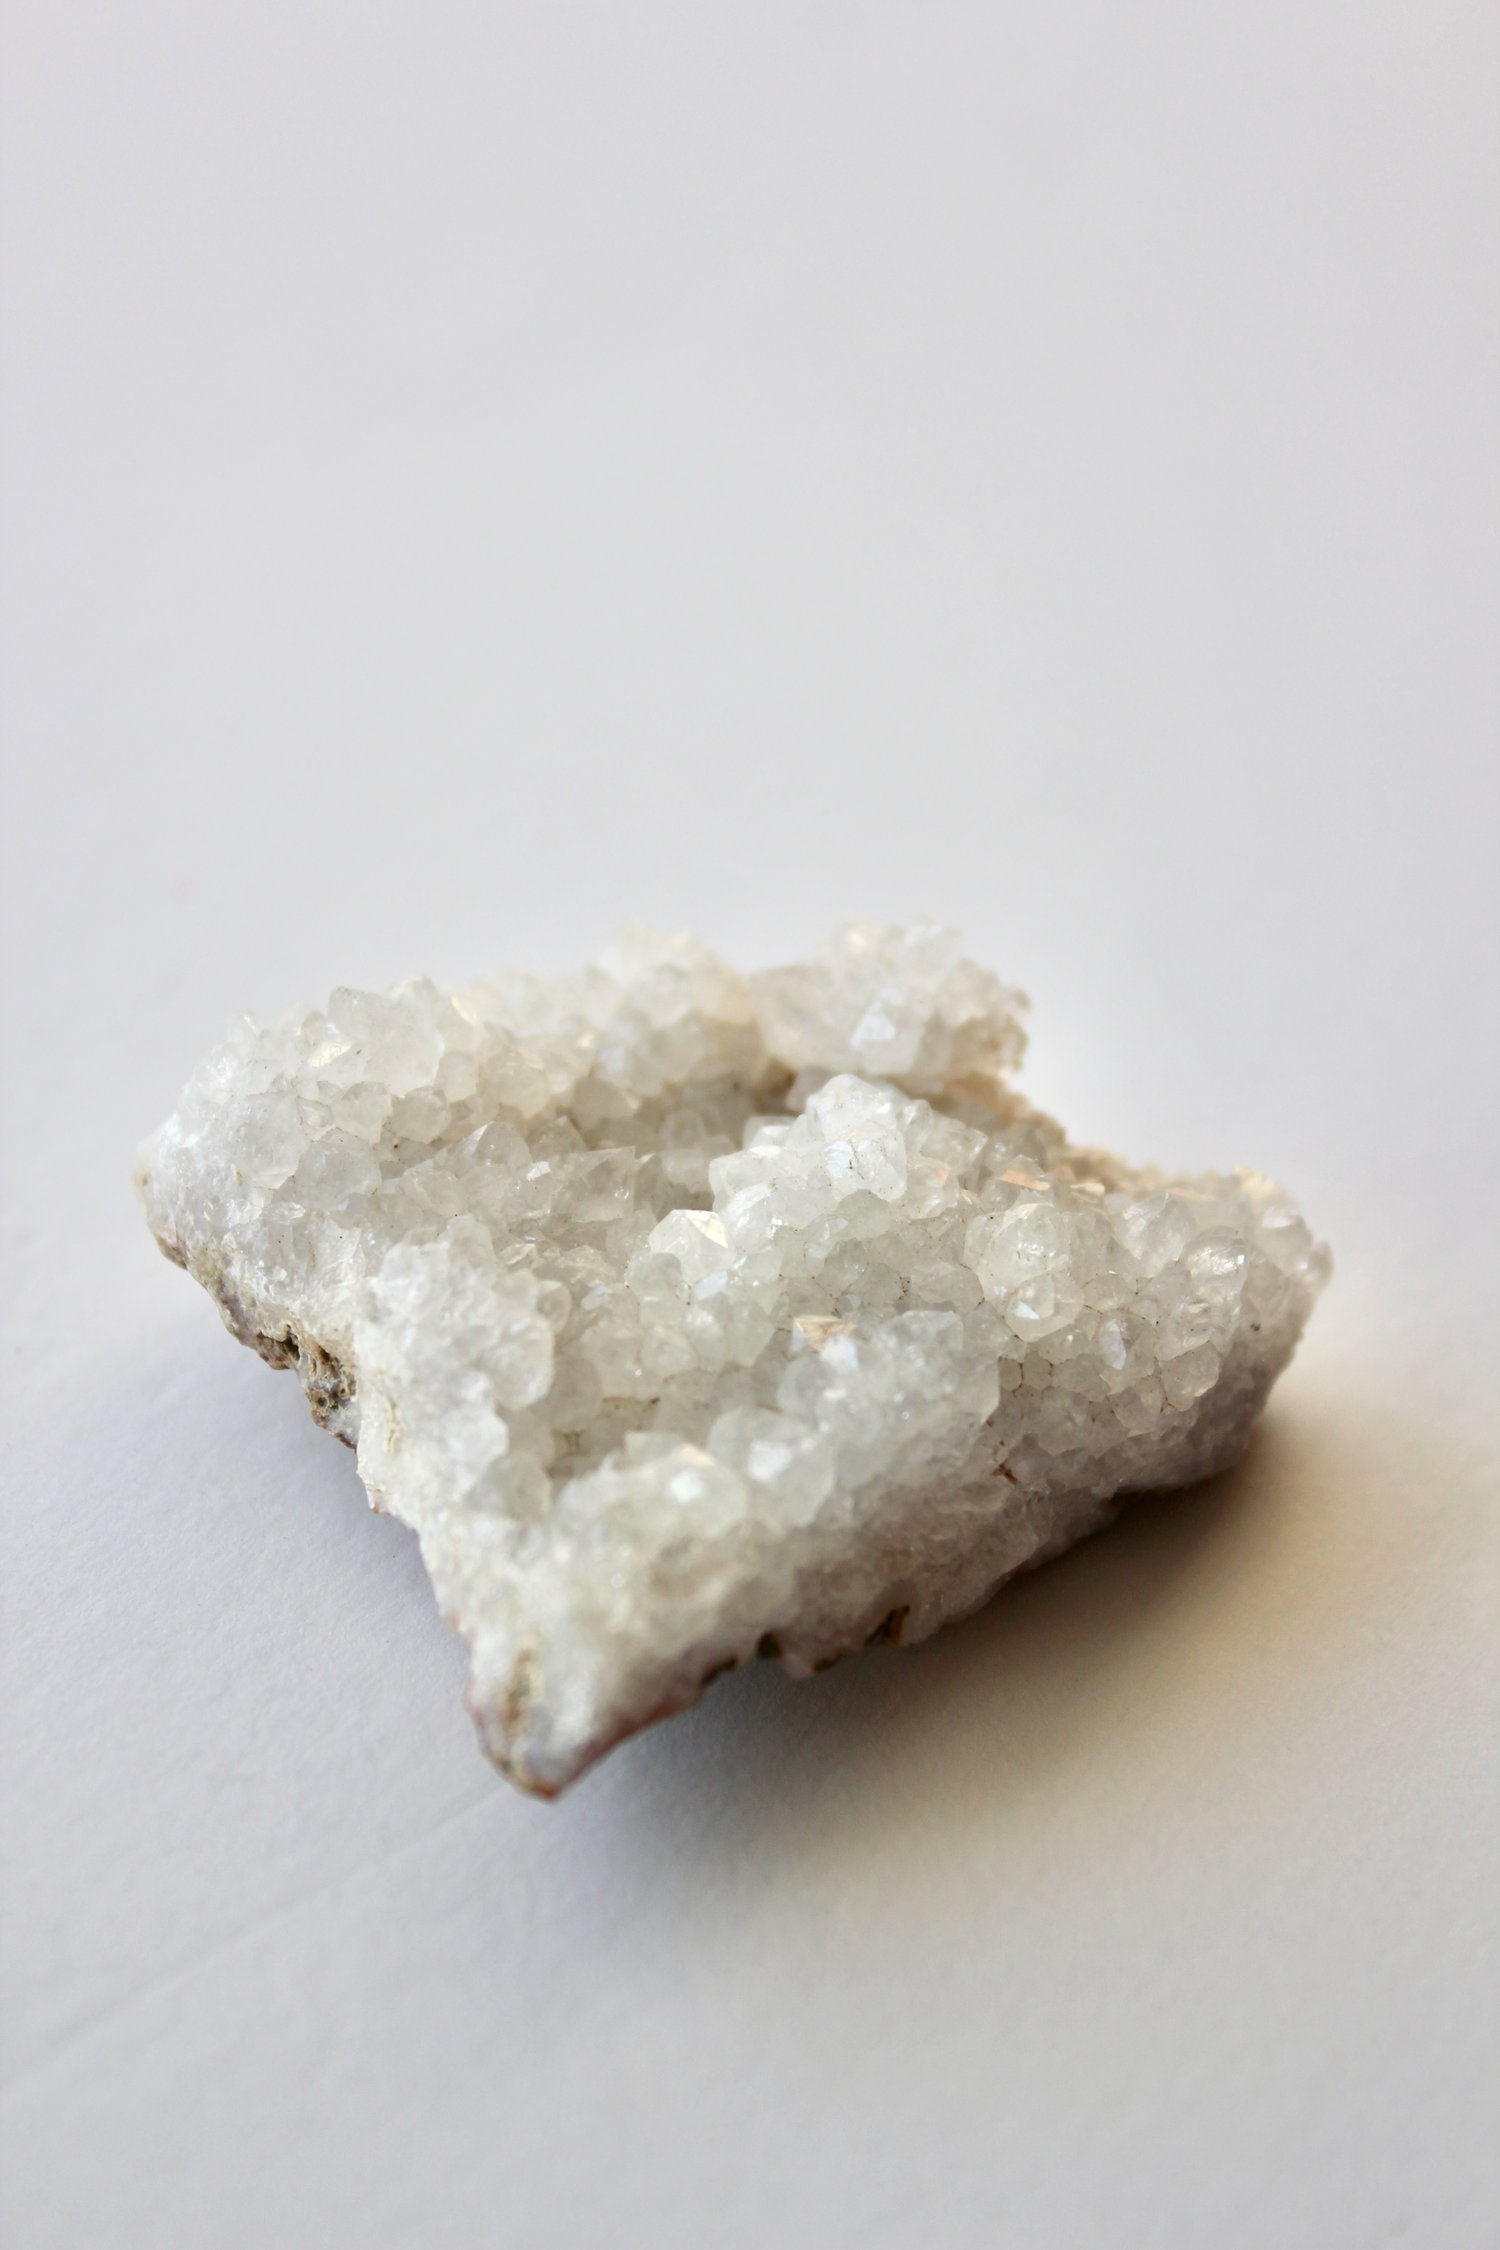 Image of Anandalite Crystal